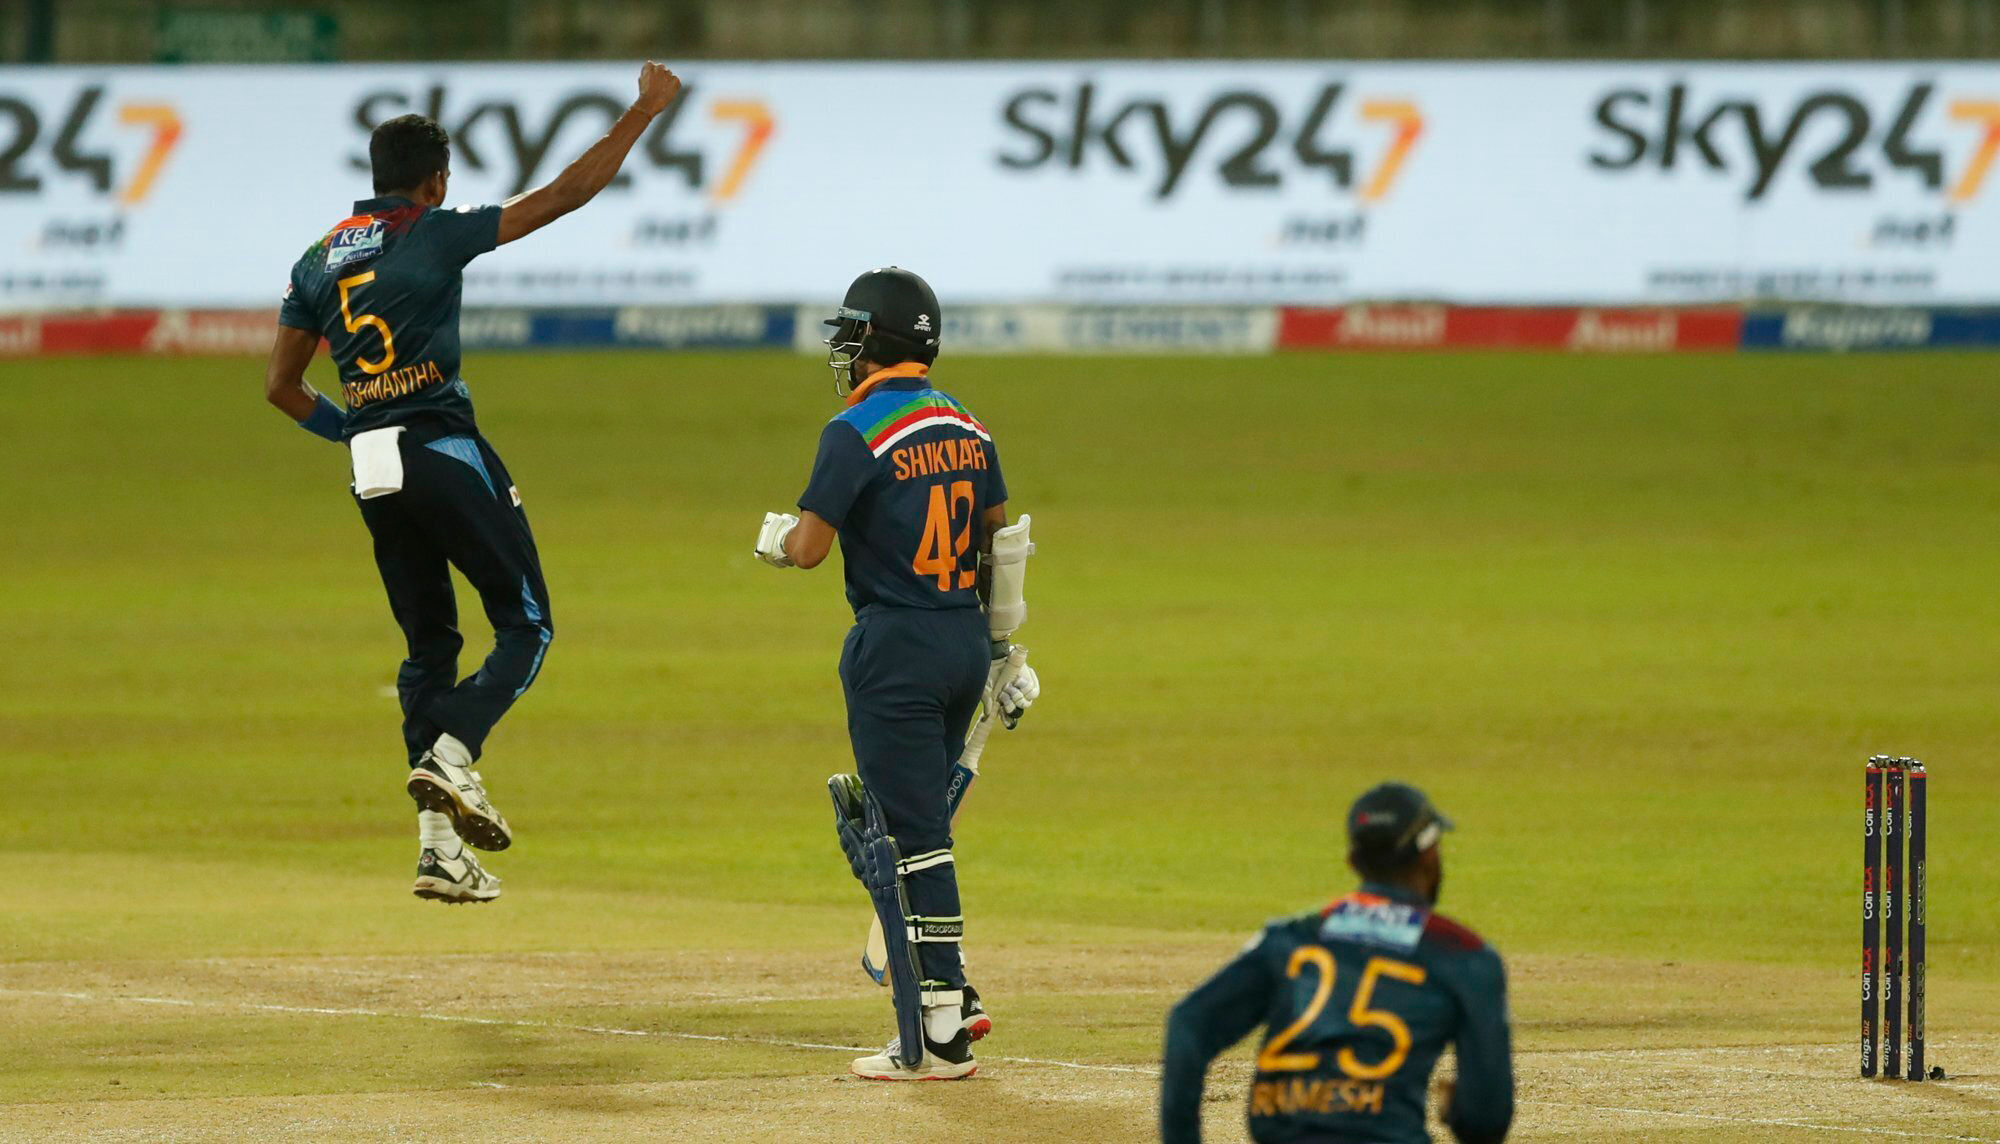 3rd T20I: India score 81/8 in 20 overs against Sri Lanka